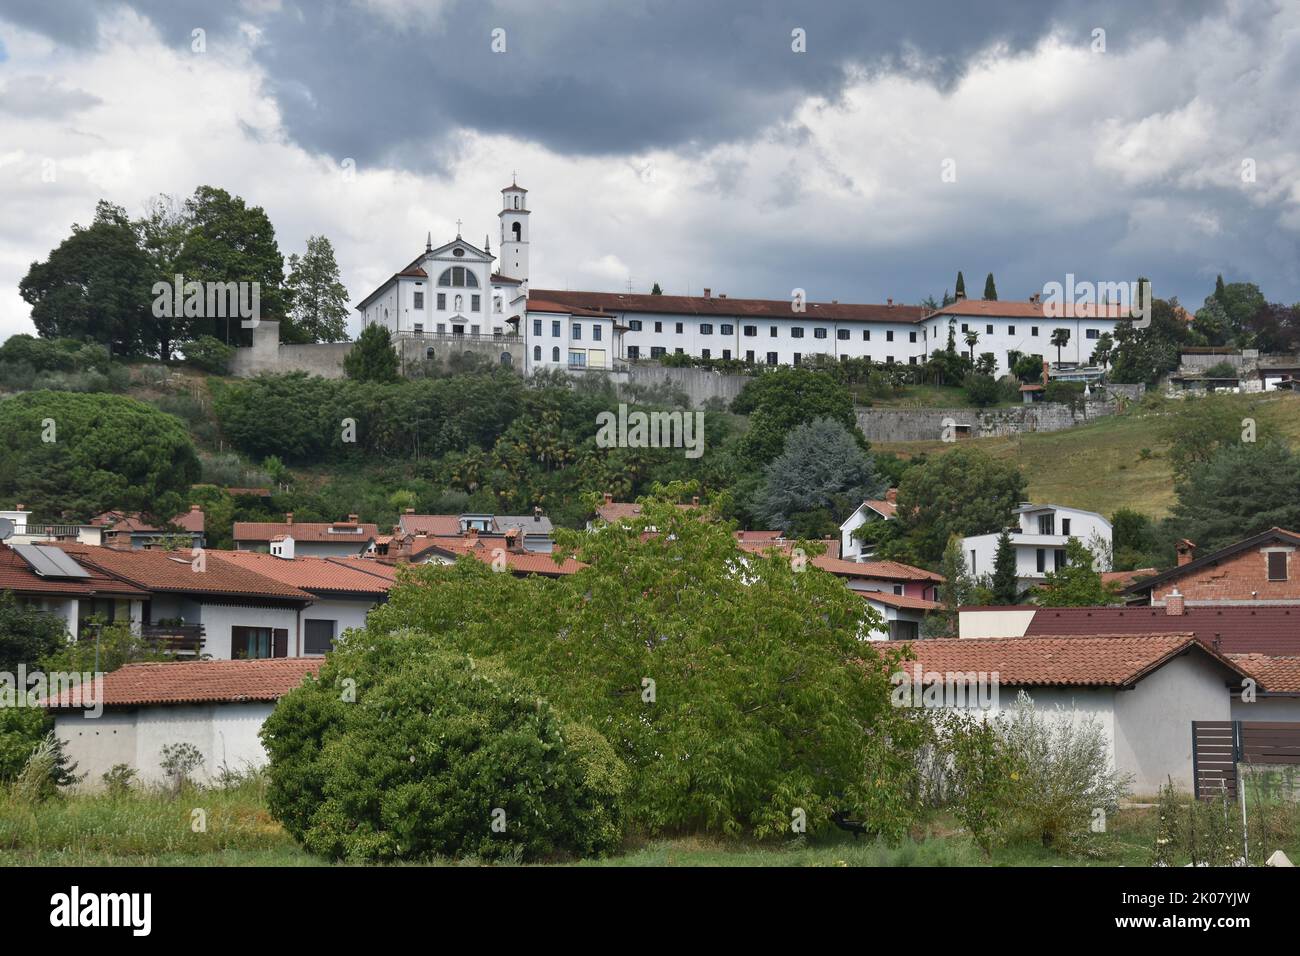 The monastery of Kostanjevica in Nova Gorica, Slovenia. Border with Gorizia, Italy Stock Photo